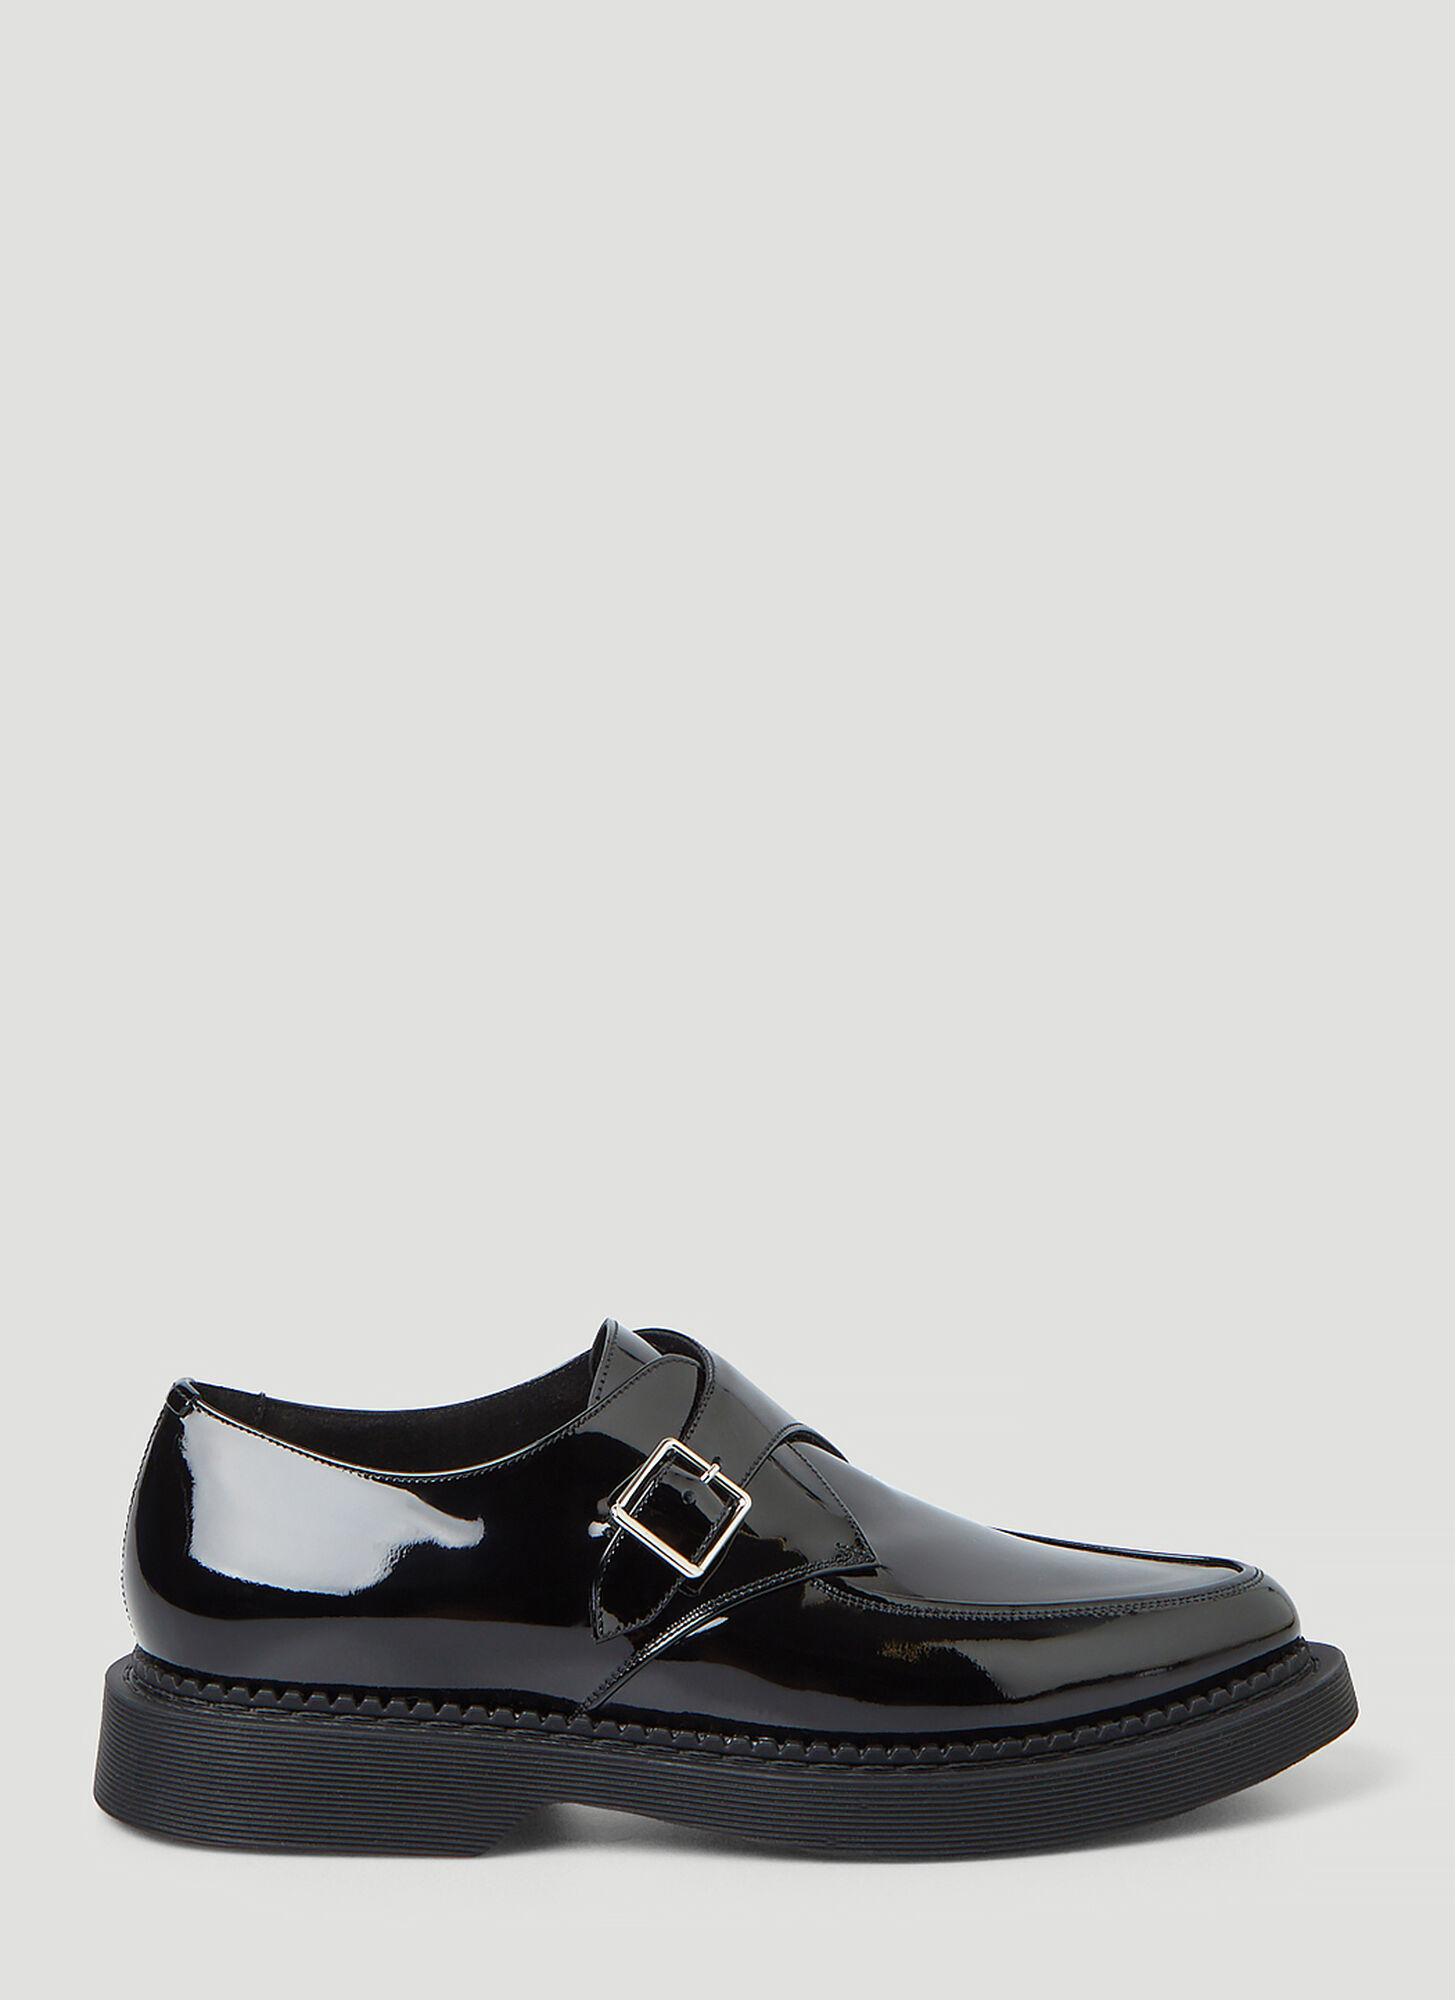 Saint Laurent Buckle Leather Shoes In Black